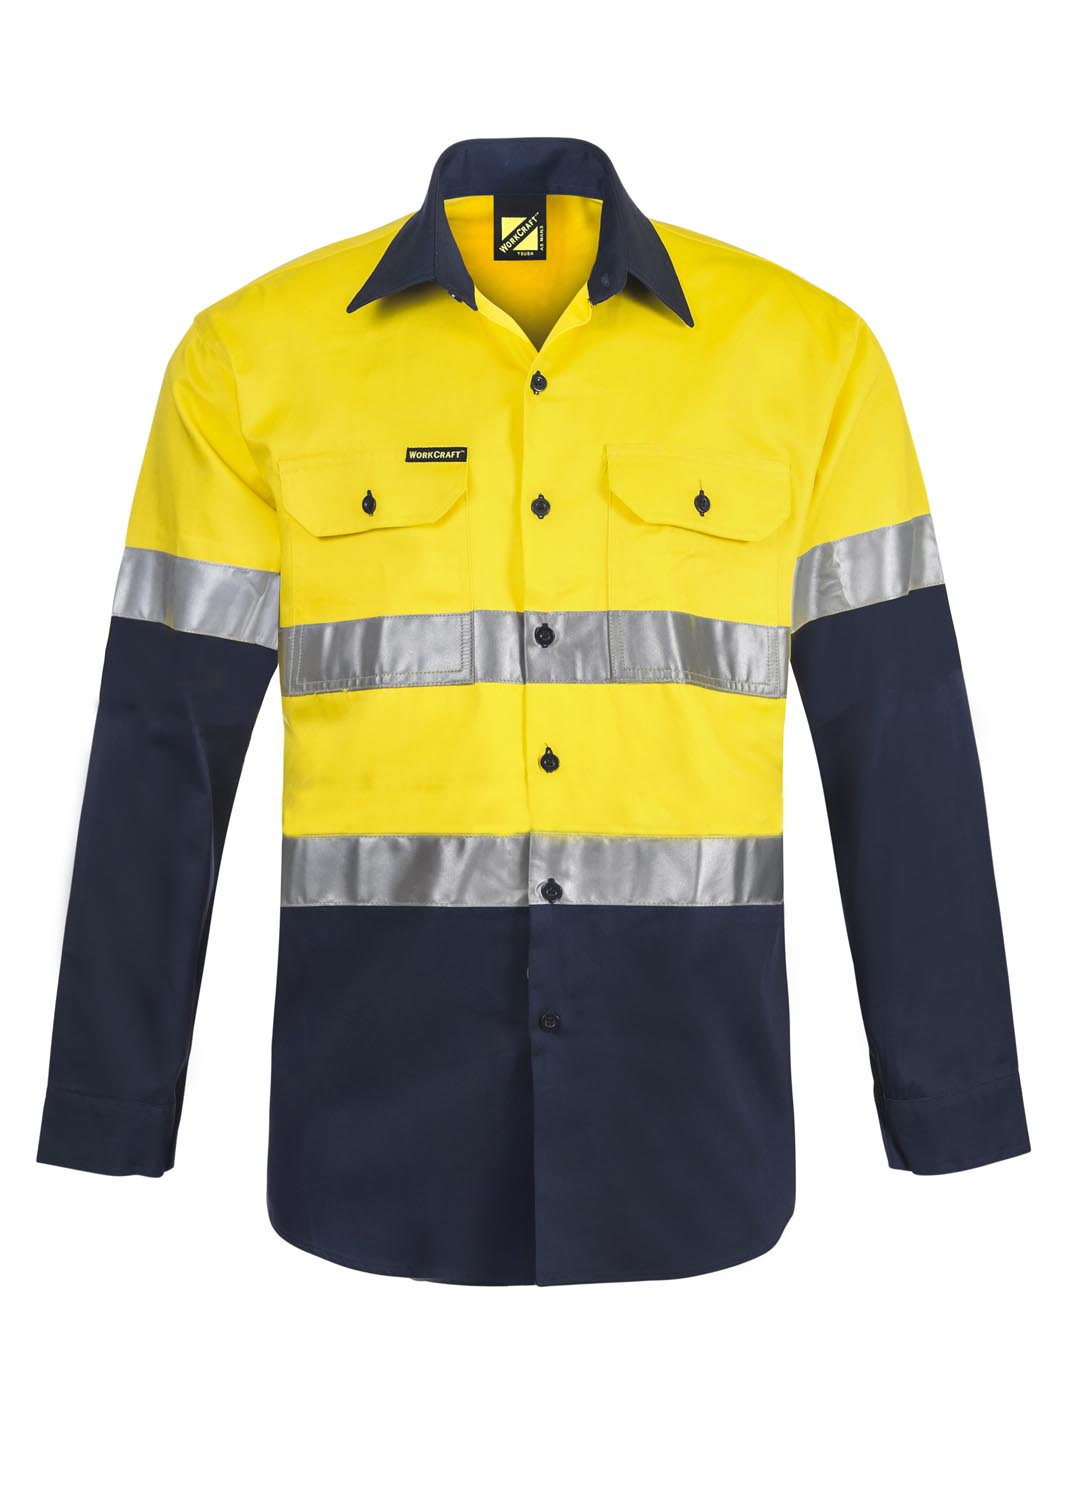 WS6030 custom reflective vented tradie work shirt